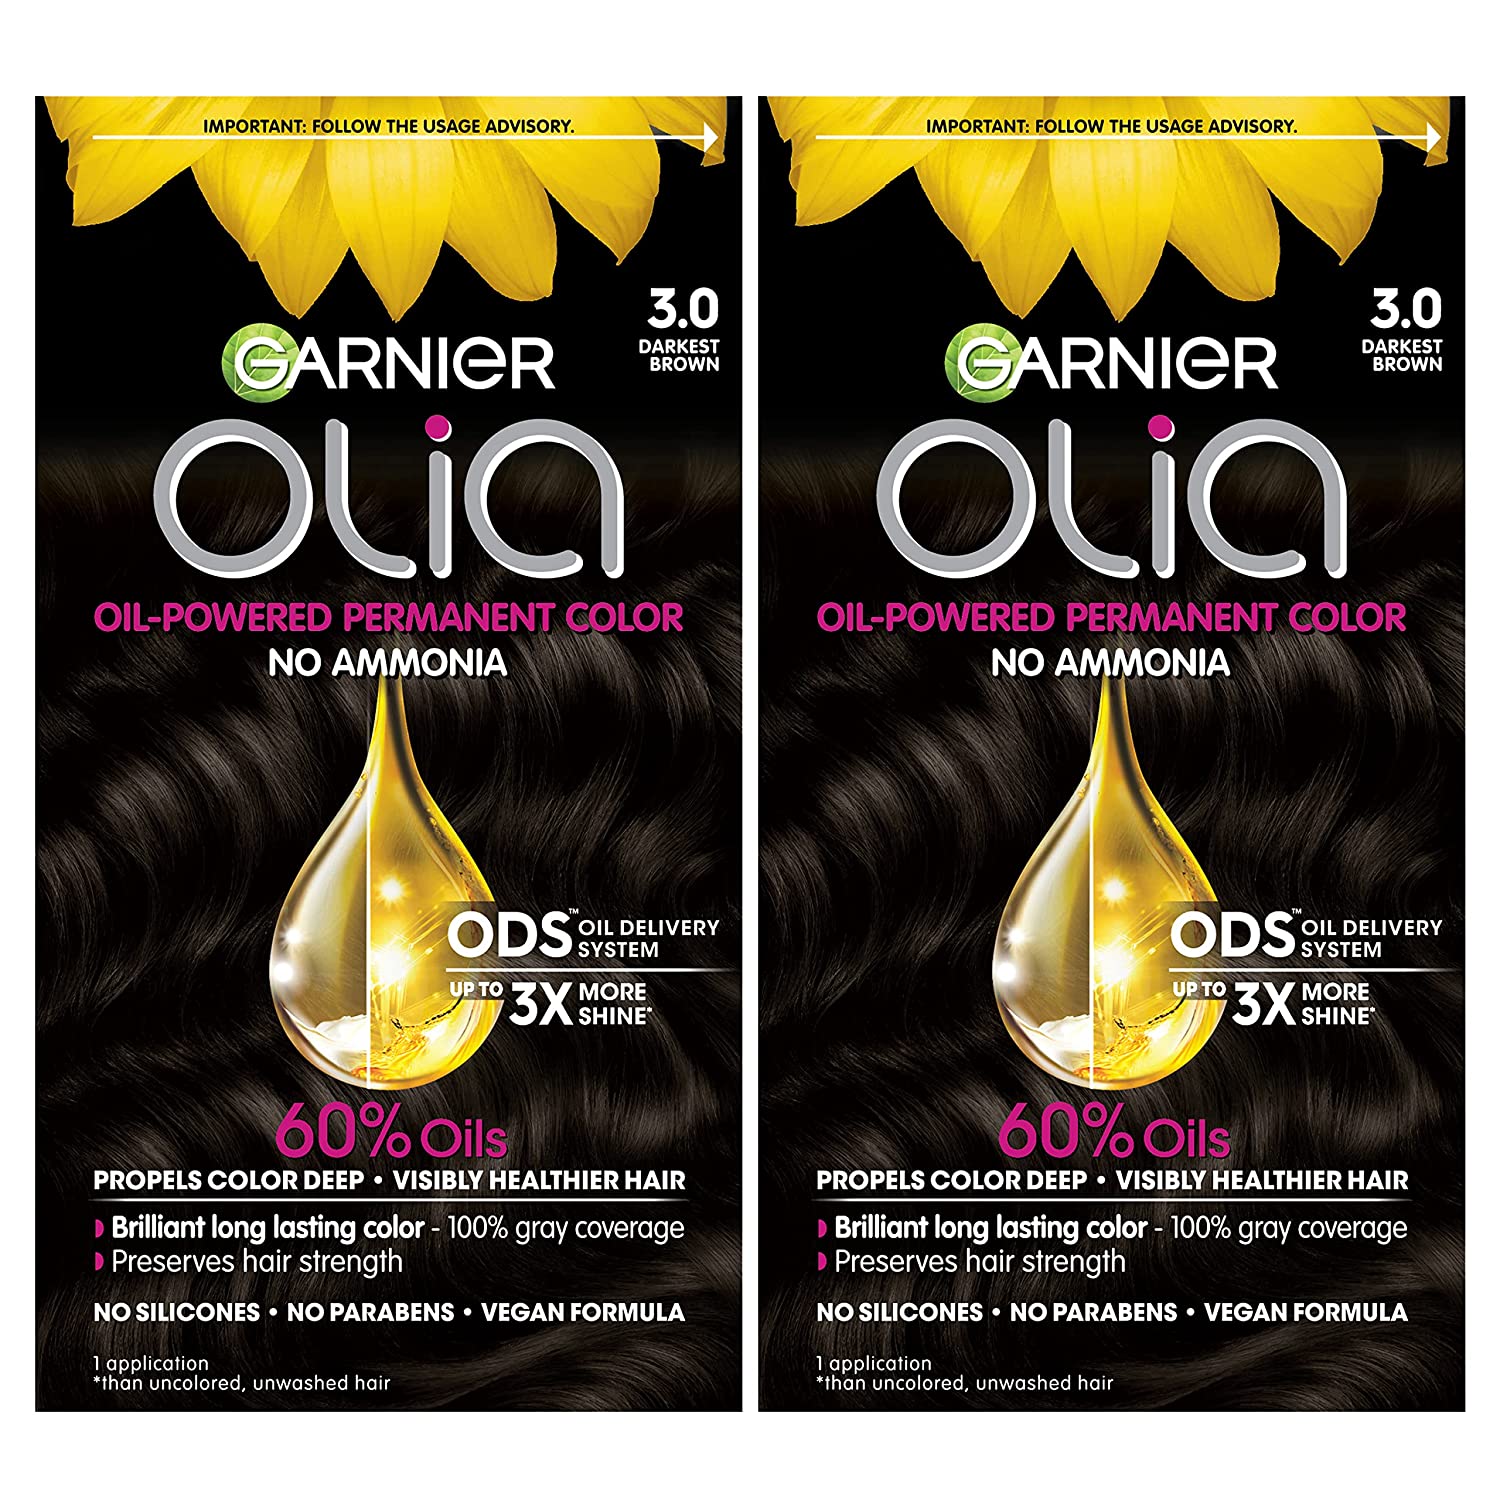  4. Garnier Olia Oil Permanent Hair Color is the best permanent hair color. 